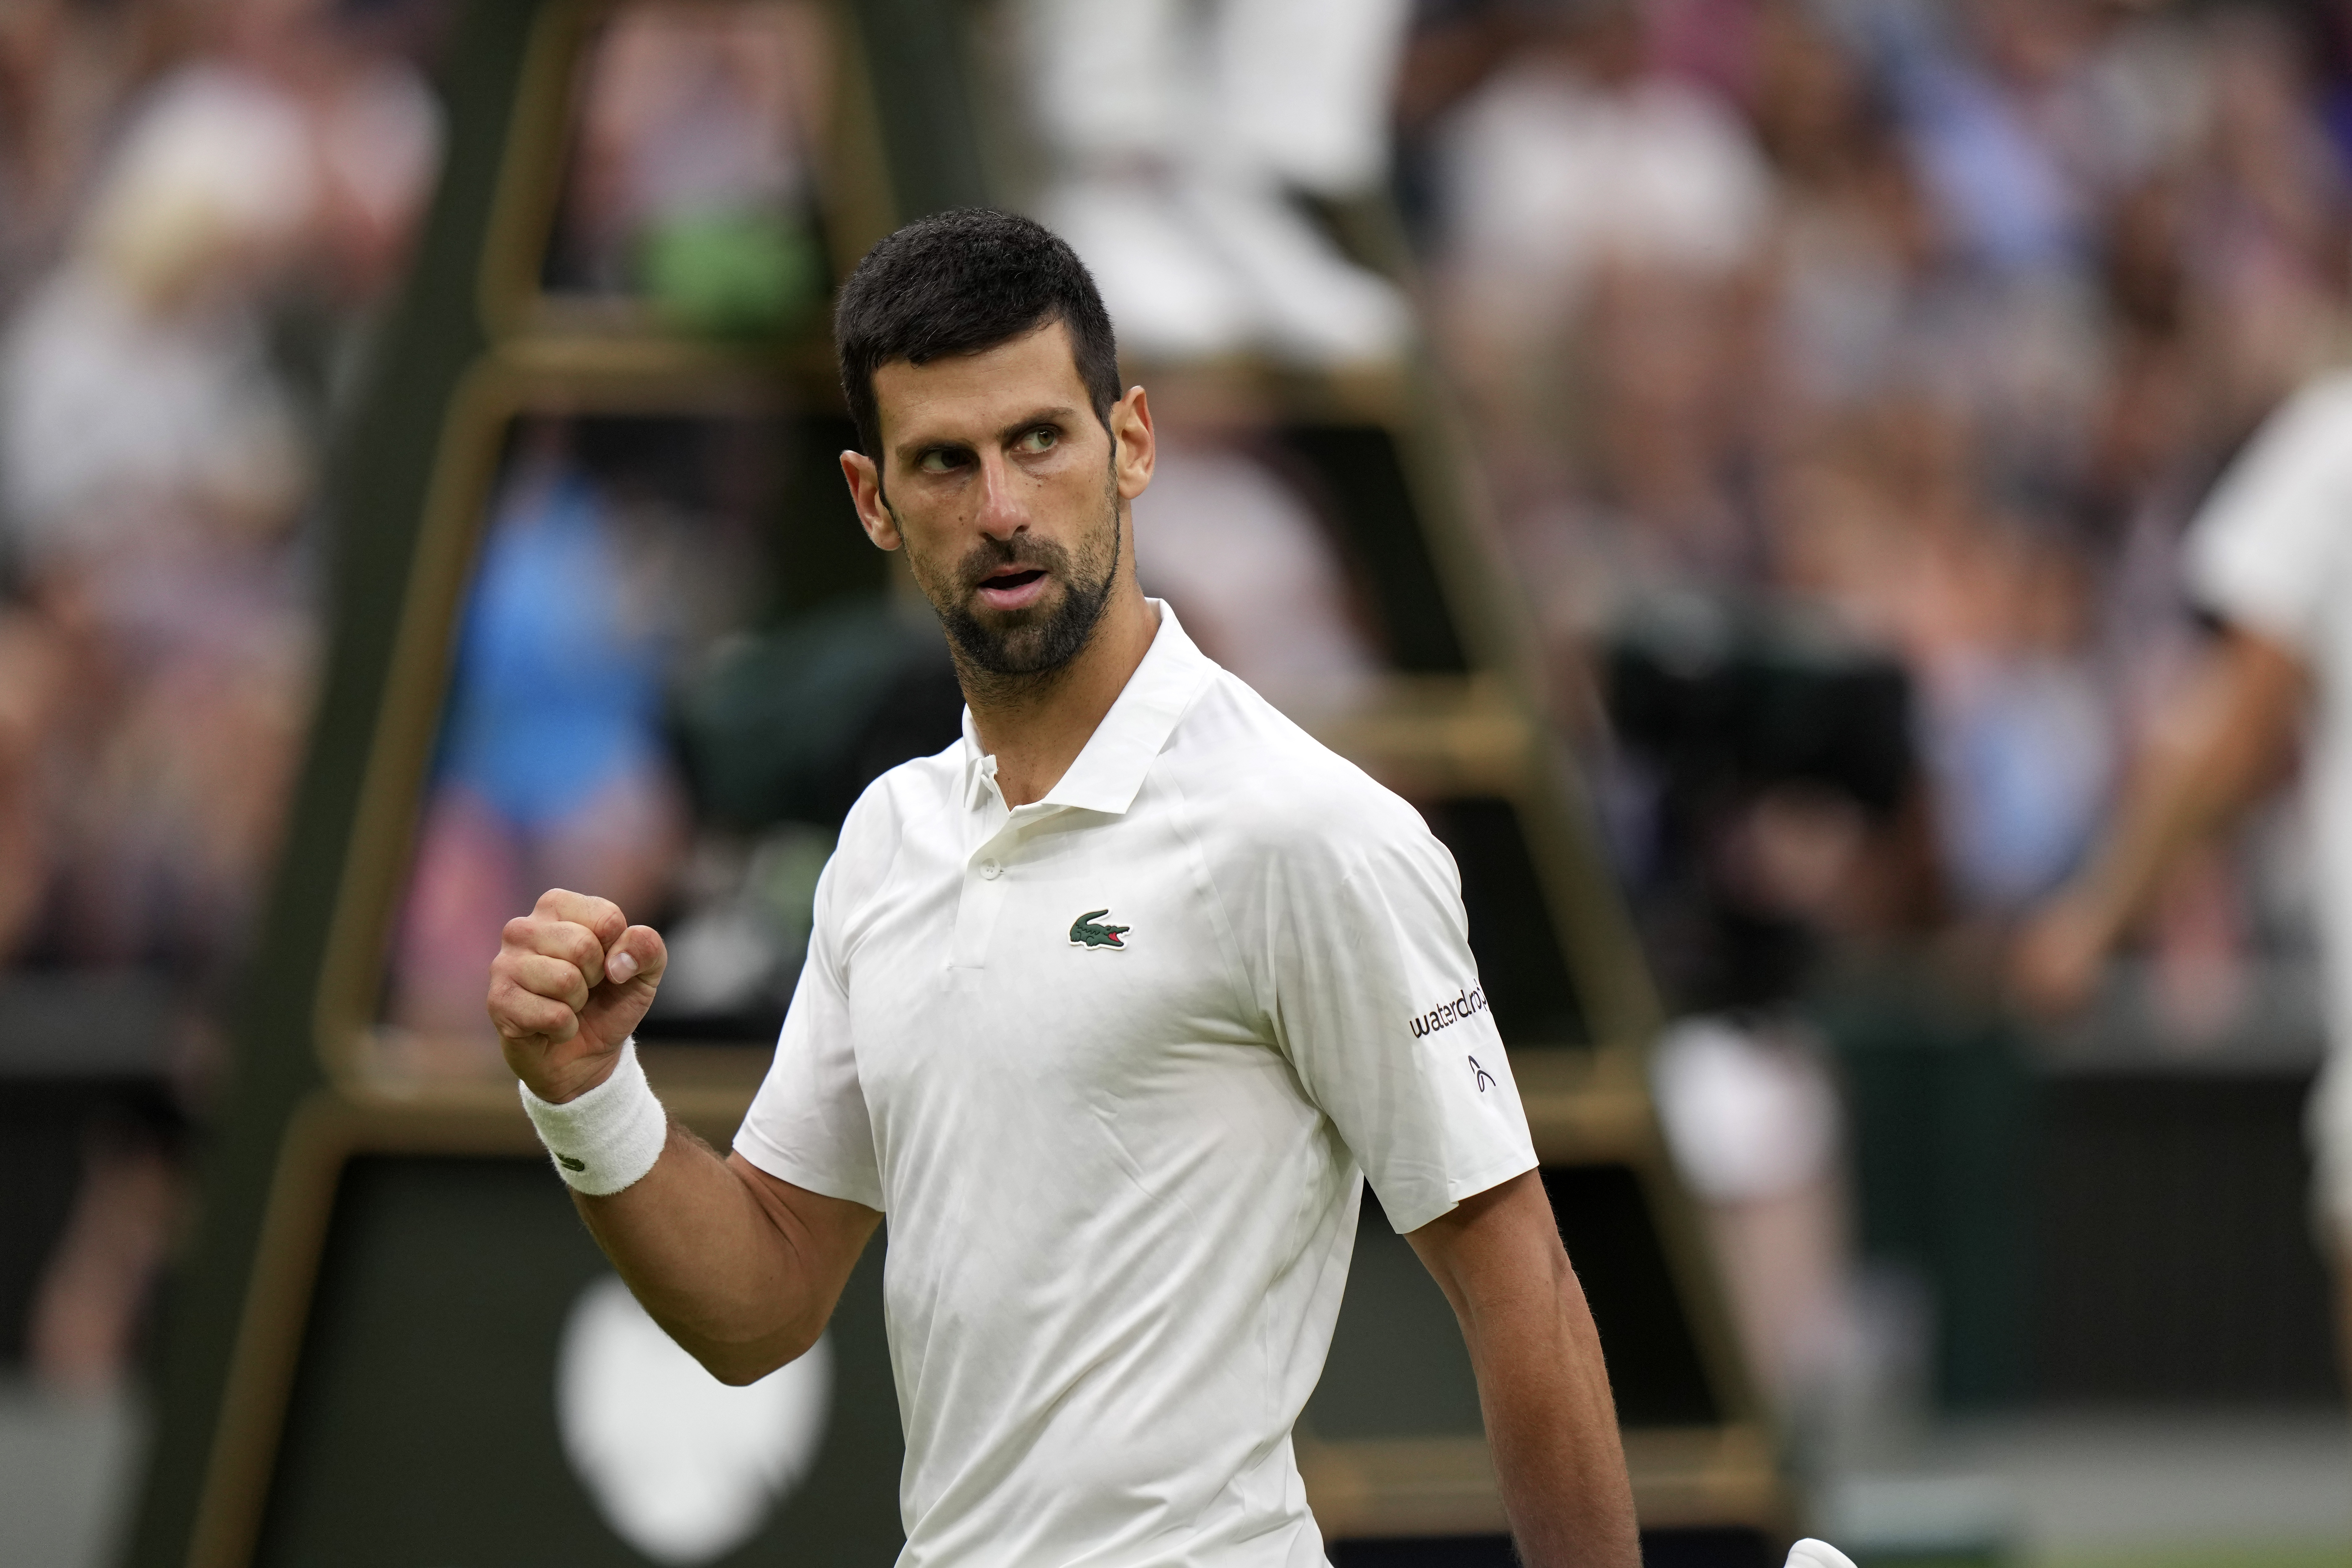 waterdrop® welcomes Novak Djokovic